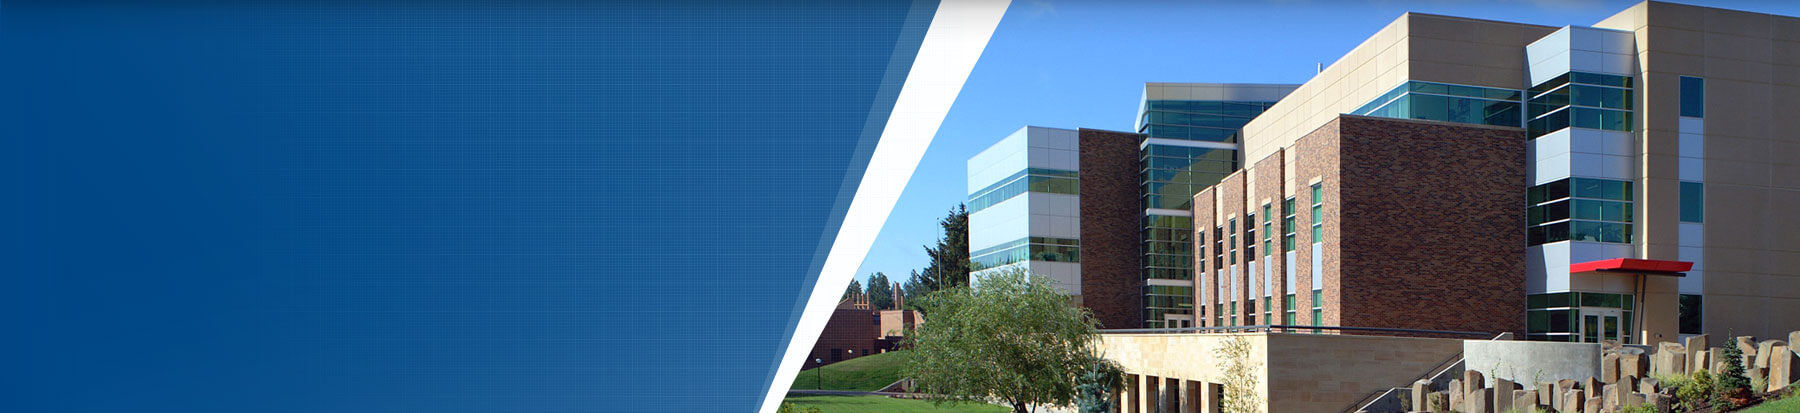 ATS Inland NW controls project at Eastern Washington University - CEB